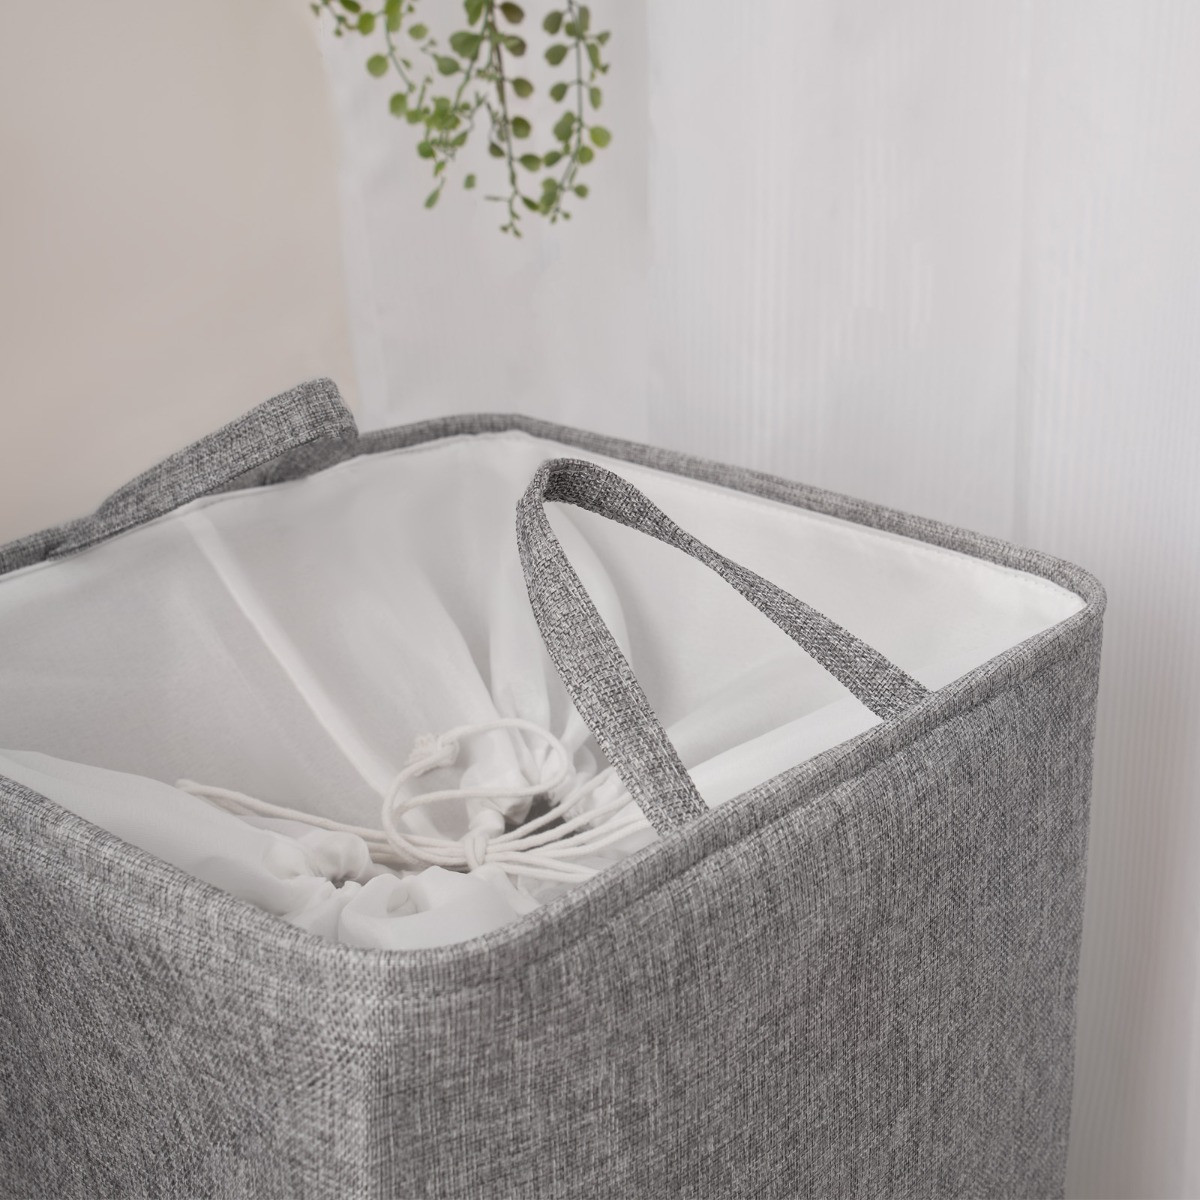 OHS Faux Linen Laundry Bag - Charcoal>